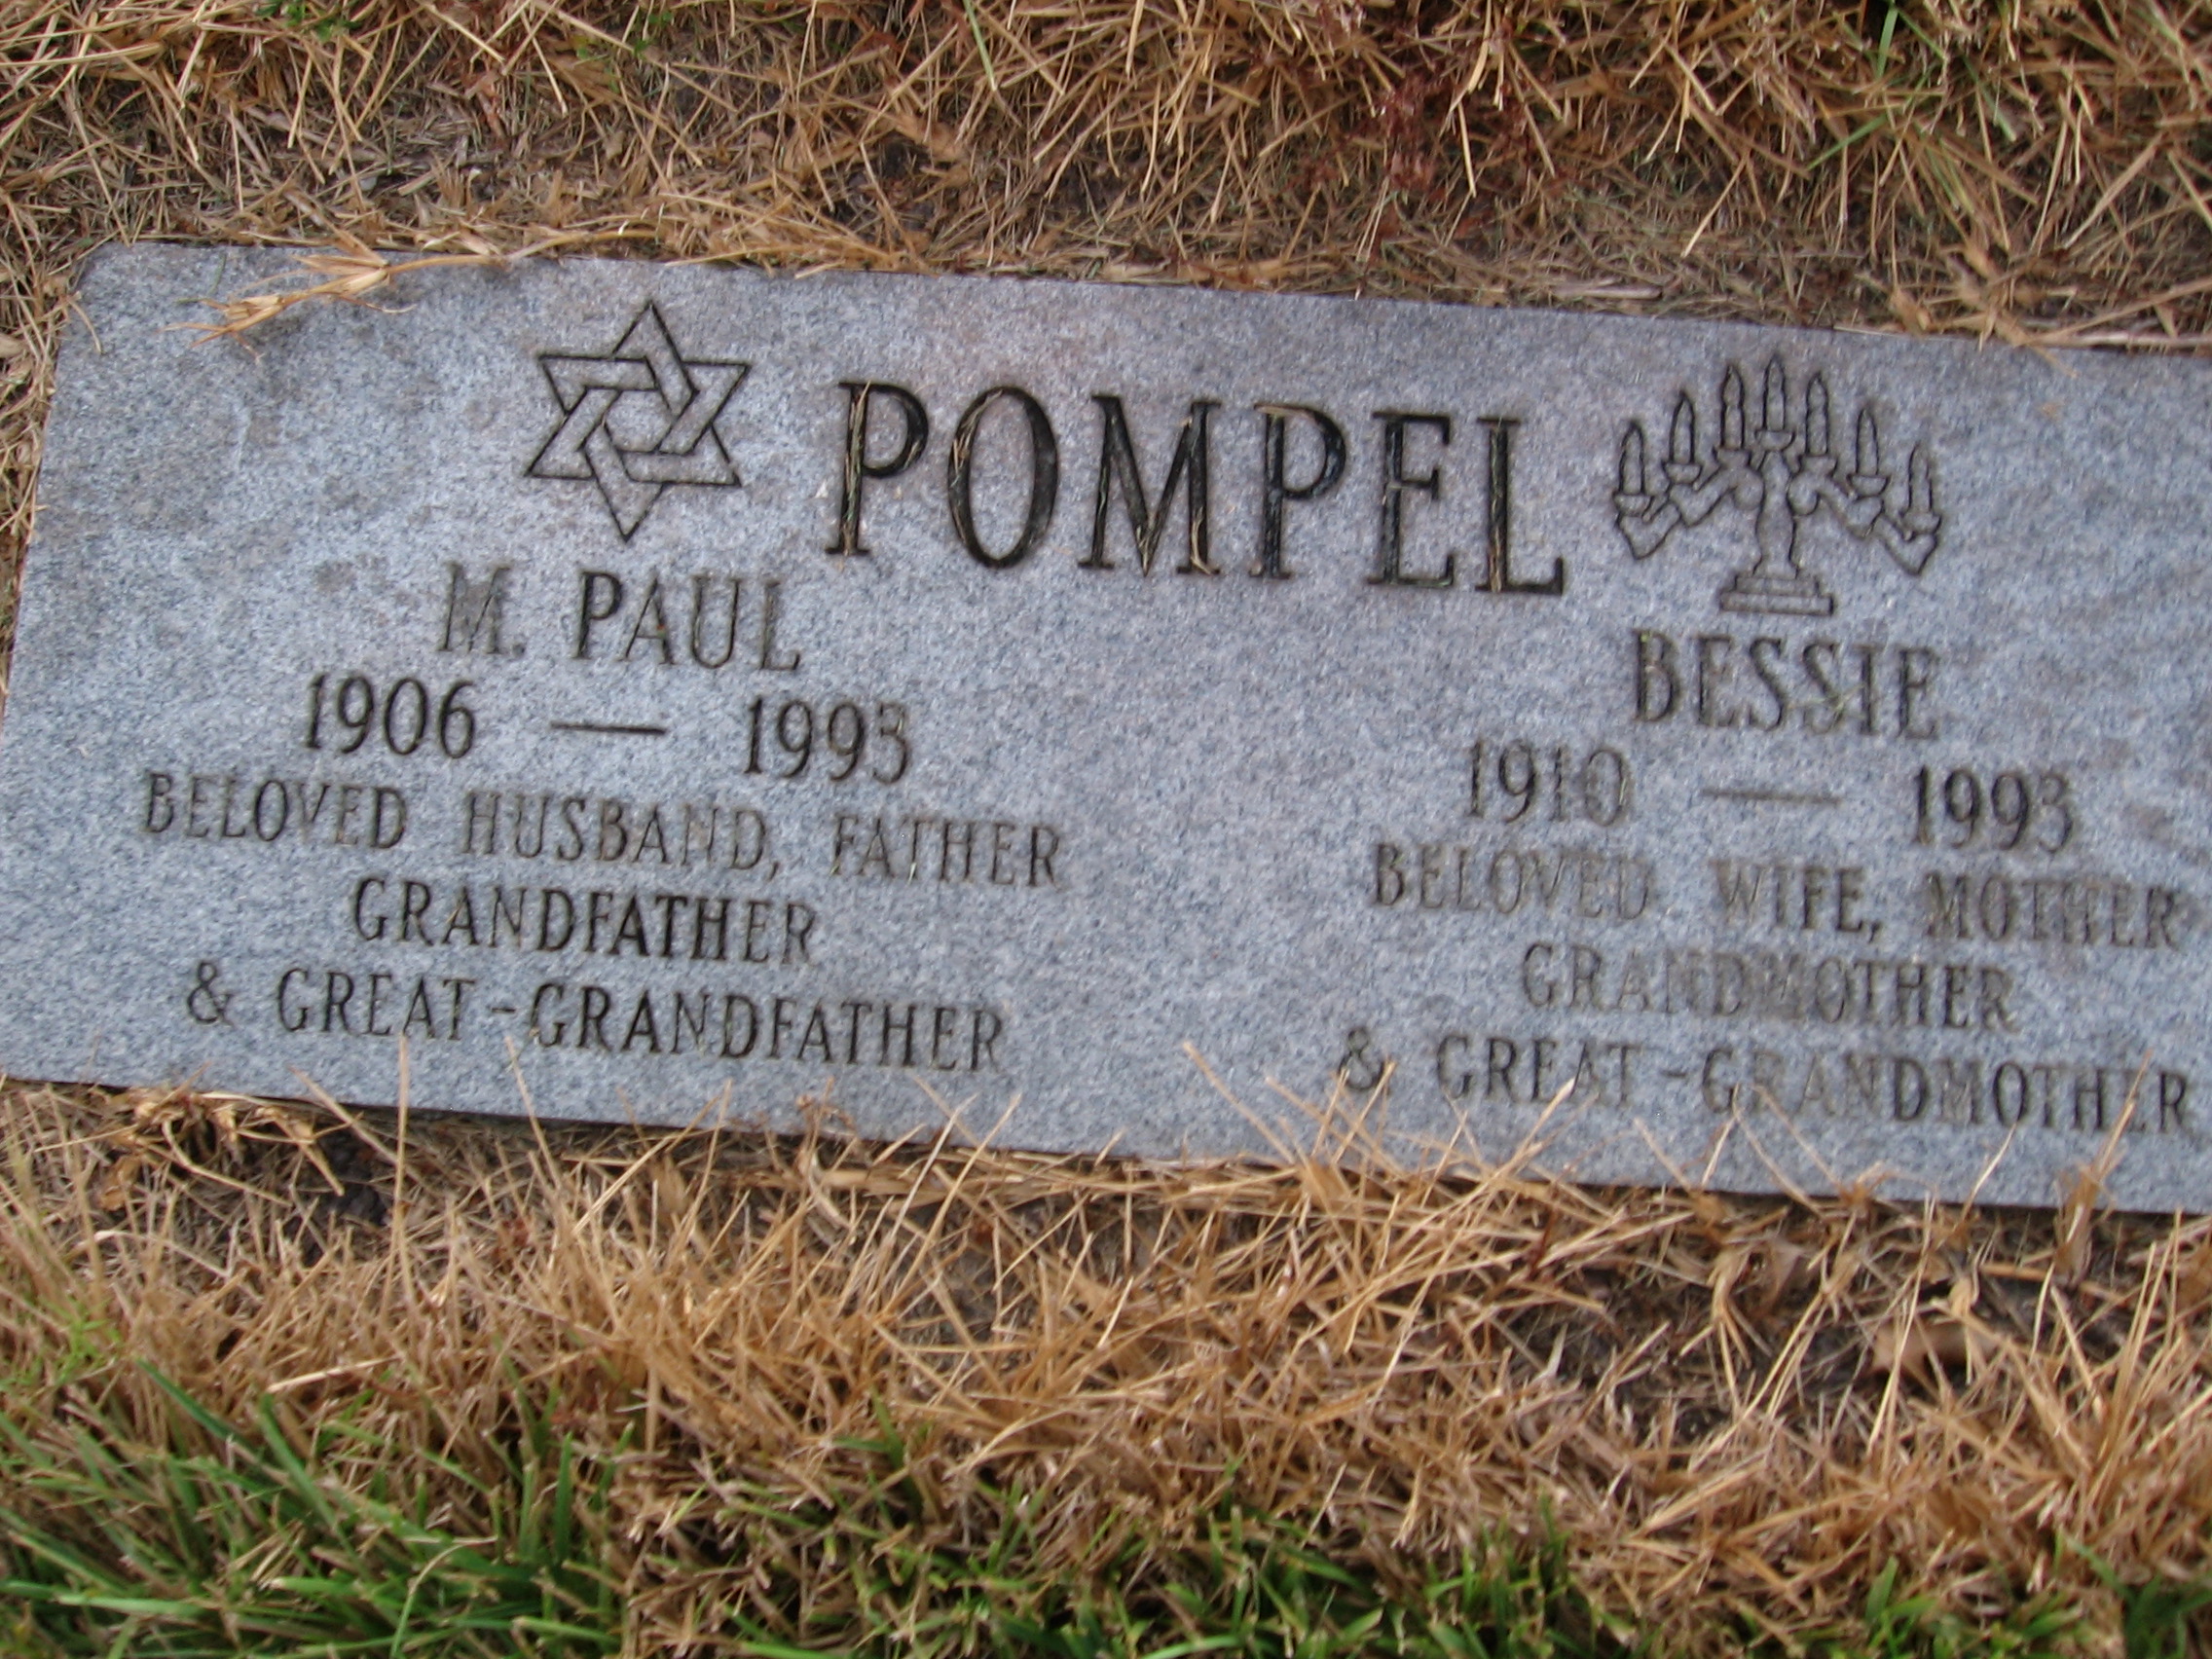 M Paul Pompel